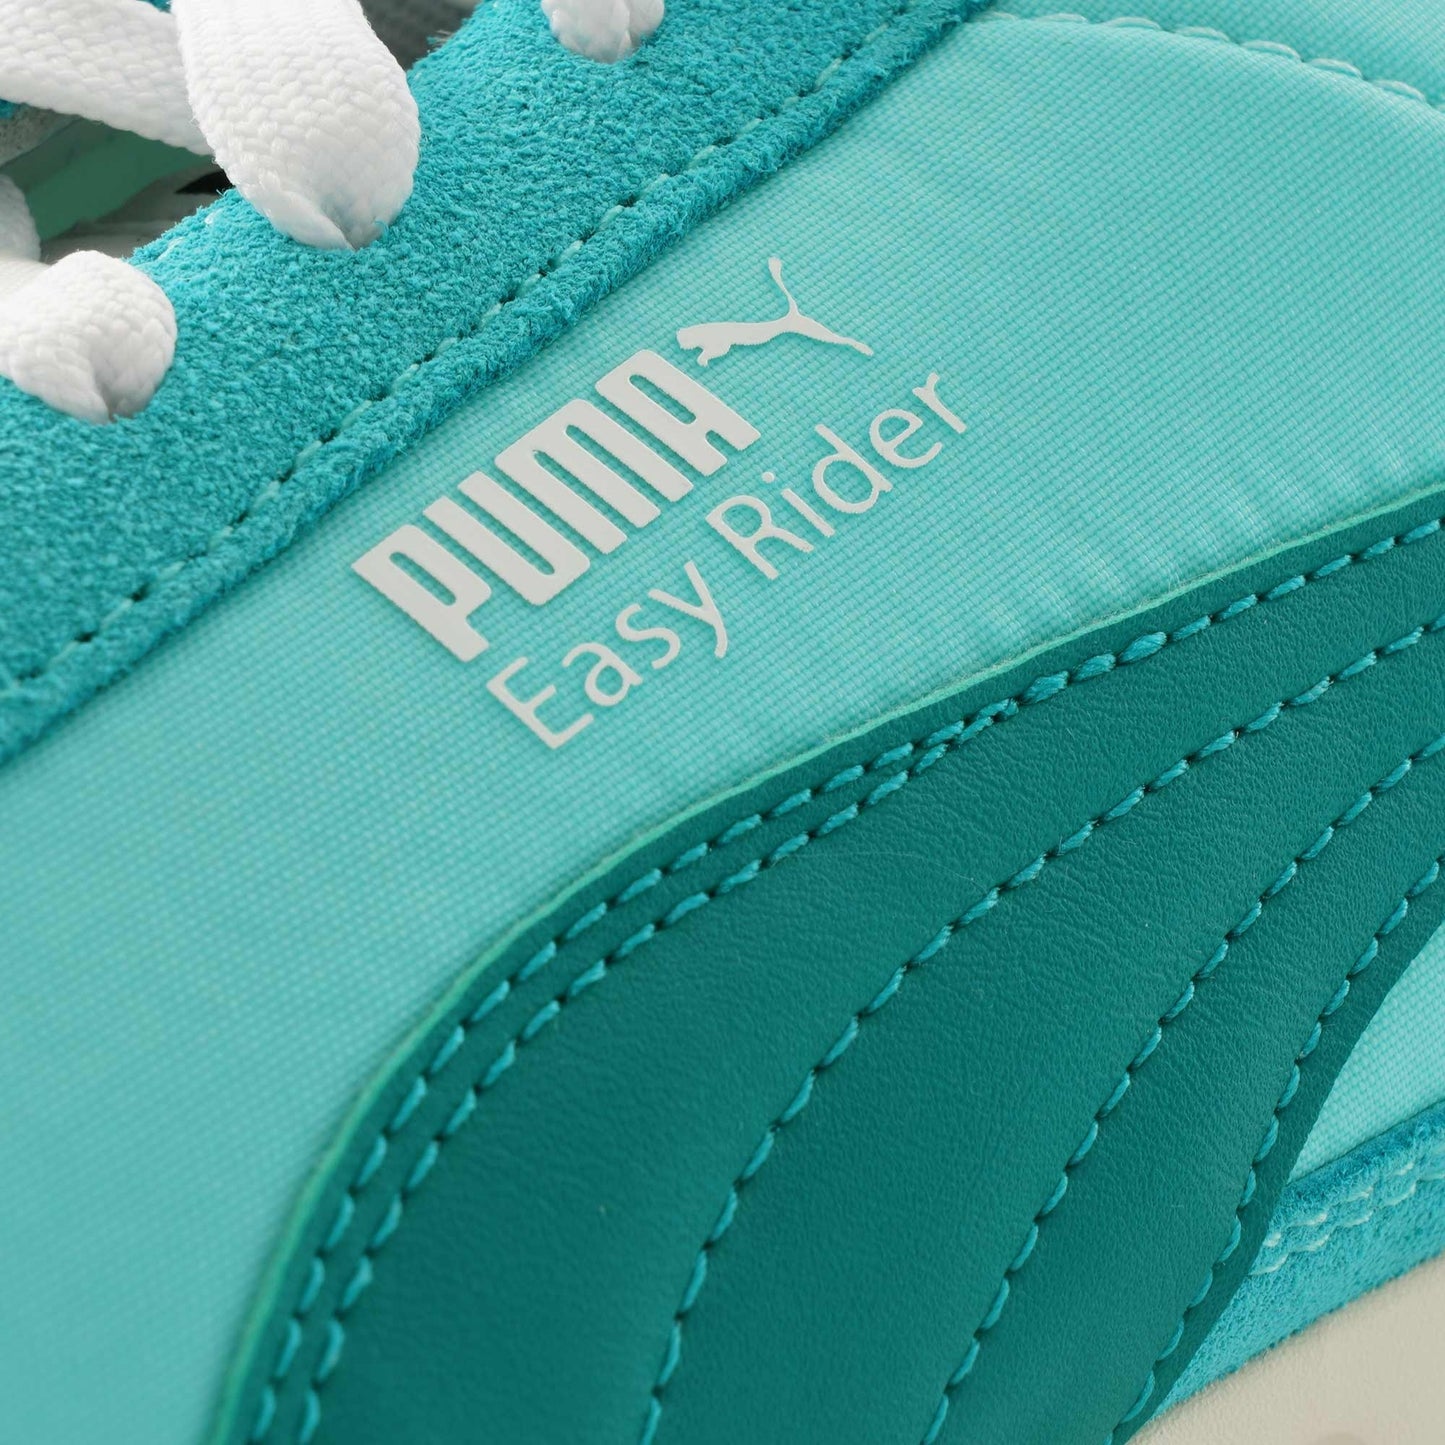 Puma Men's Easy Rider II Elektro Turqoise Shoes 381026-05 New Sneakers Size 9